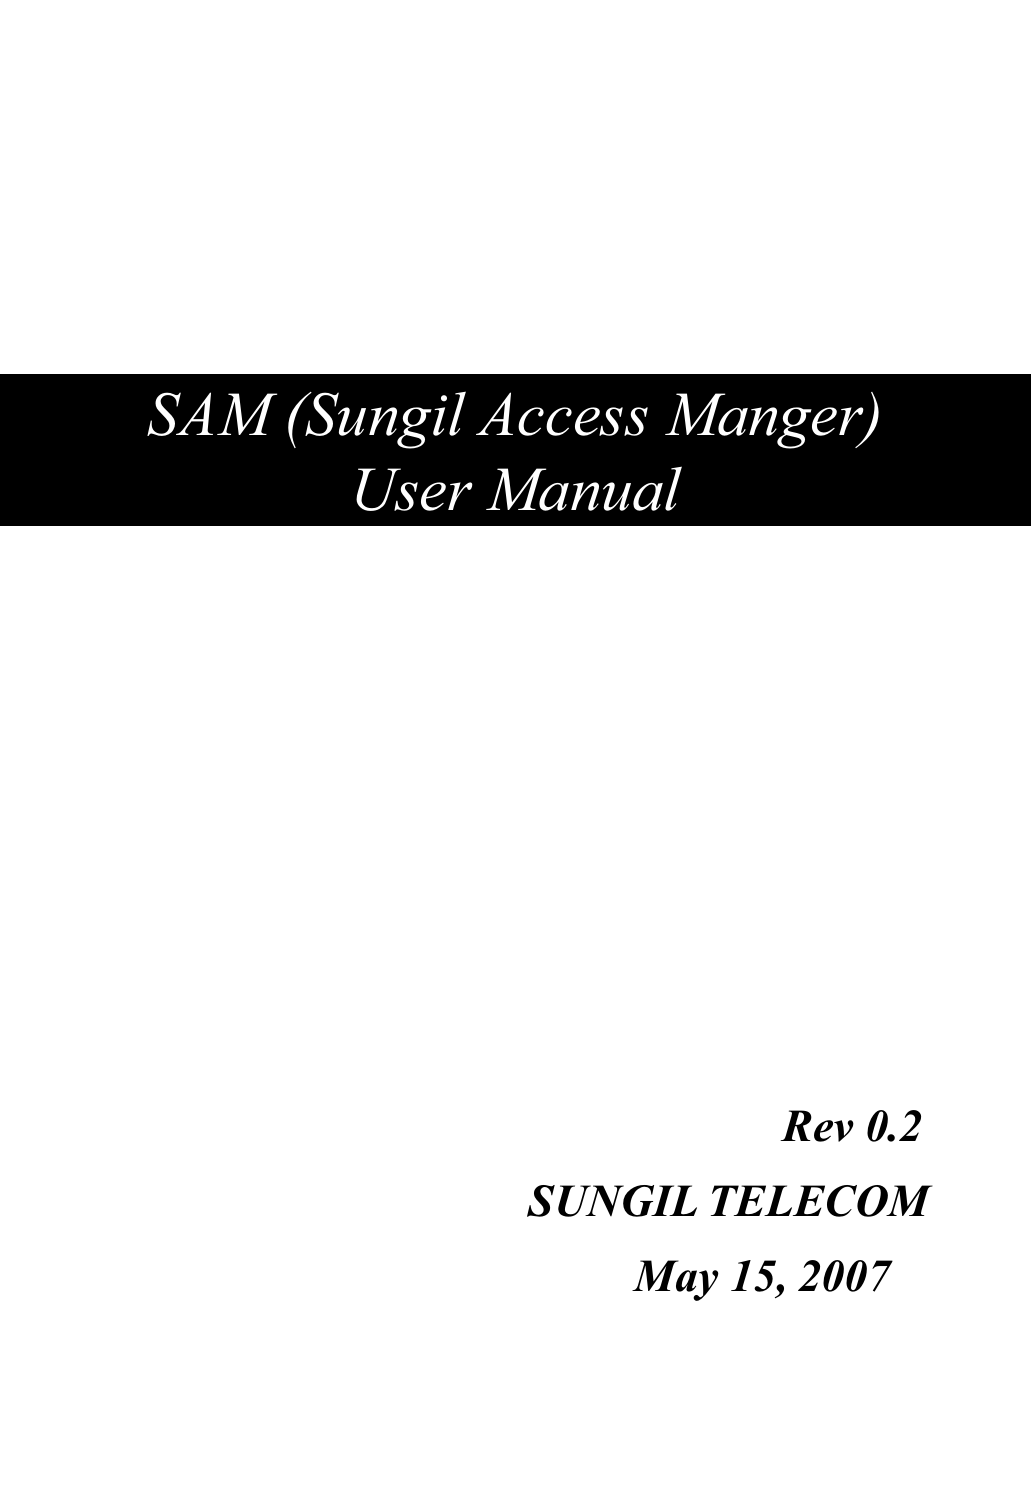                SAM (Sungil Access Manger)   User Manual GGGGGGGGGGGGGGG                              Rev 0.2                    SUNGIL TELECOM                       May 15, 2007 GGGGG